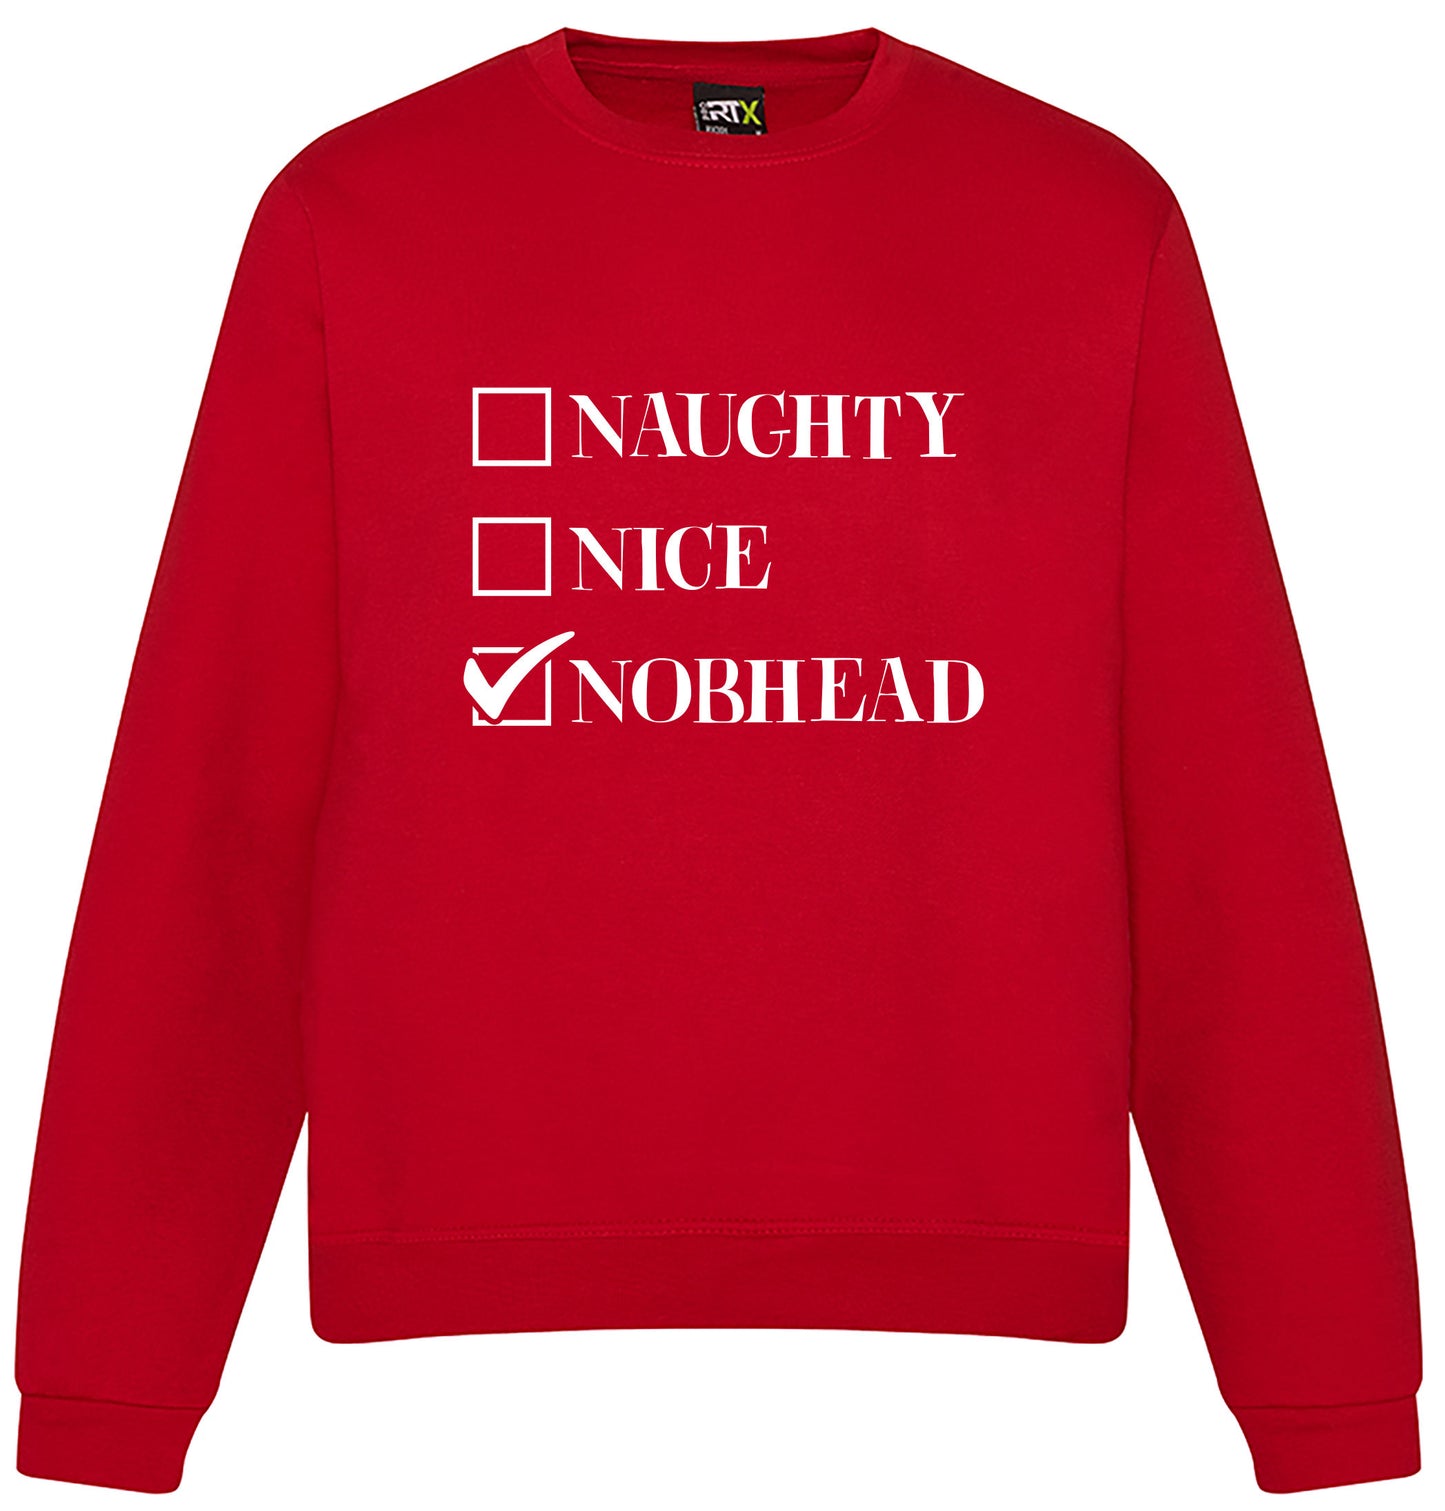 Naughty Nice Nobhead JH030 Rude Funny Christmas Check List Sweatshirt Jumper Sweater